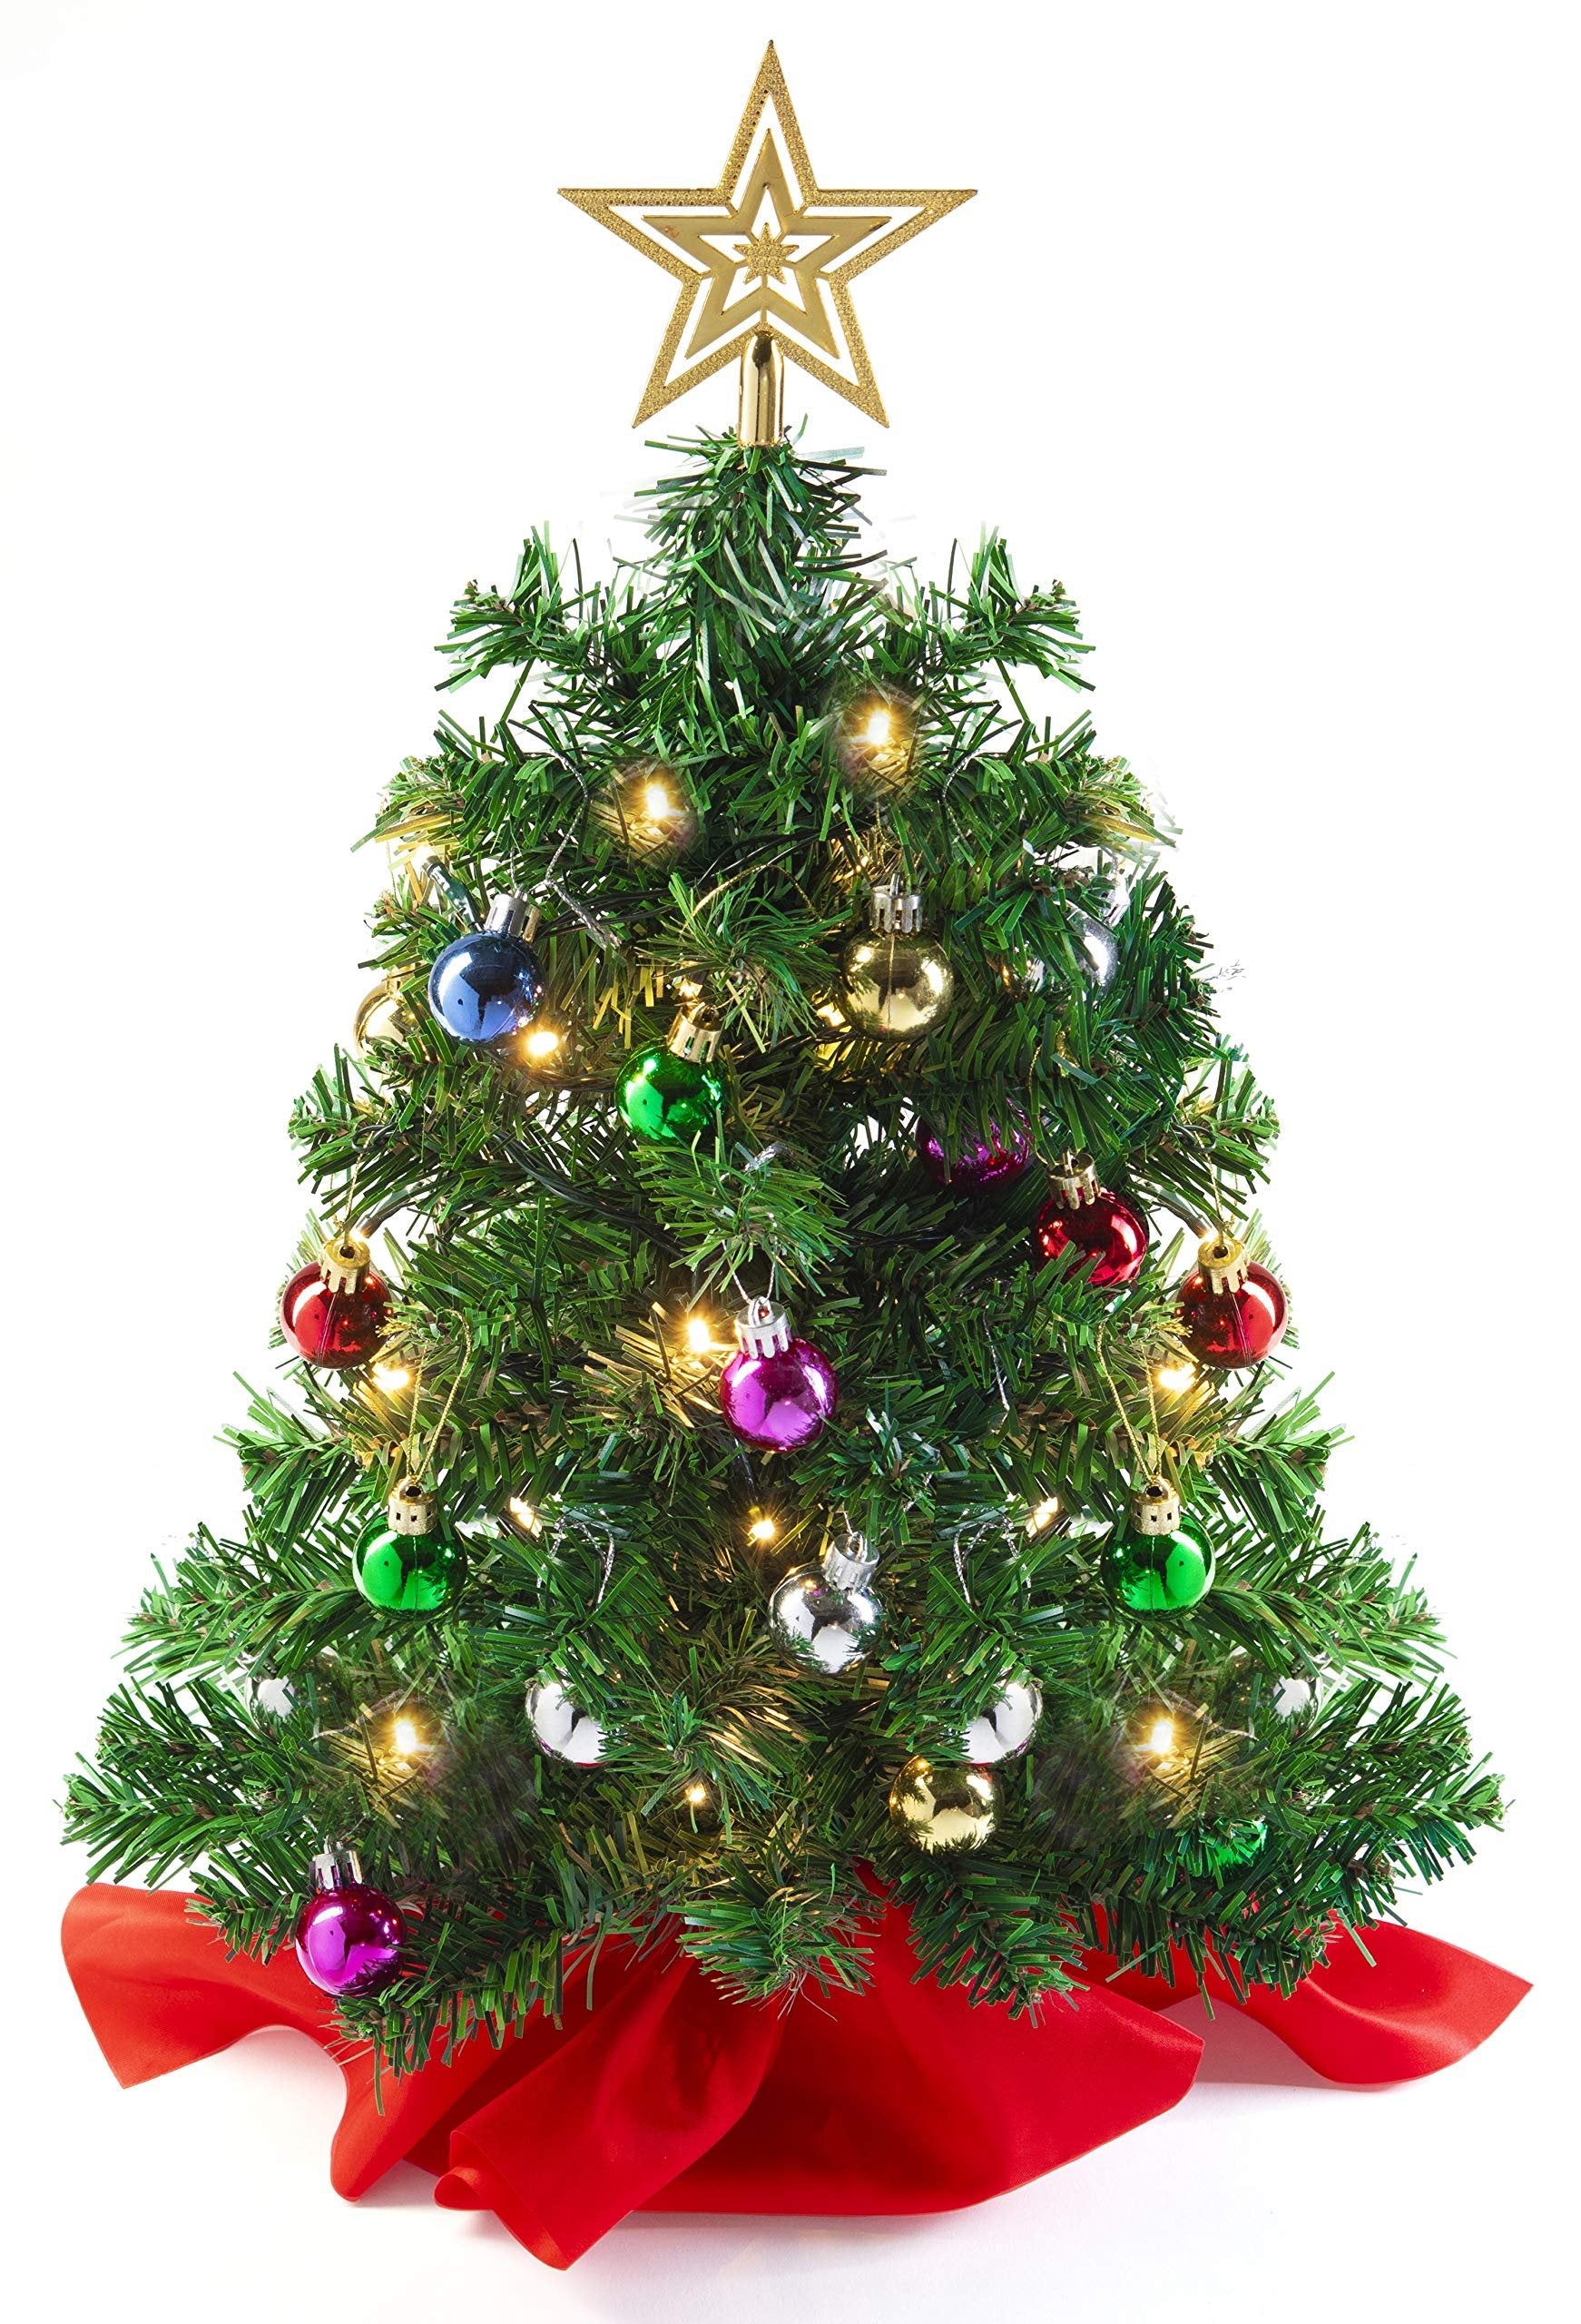 Prextex 22” Mini Christmas Tree with Lights Ornaments and Presents - Small Christmas Tree with Lights Christmas Table Decorations Little Christmas Tree White Christmas Tree - Warm White, Green